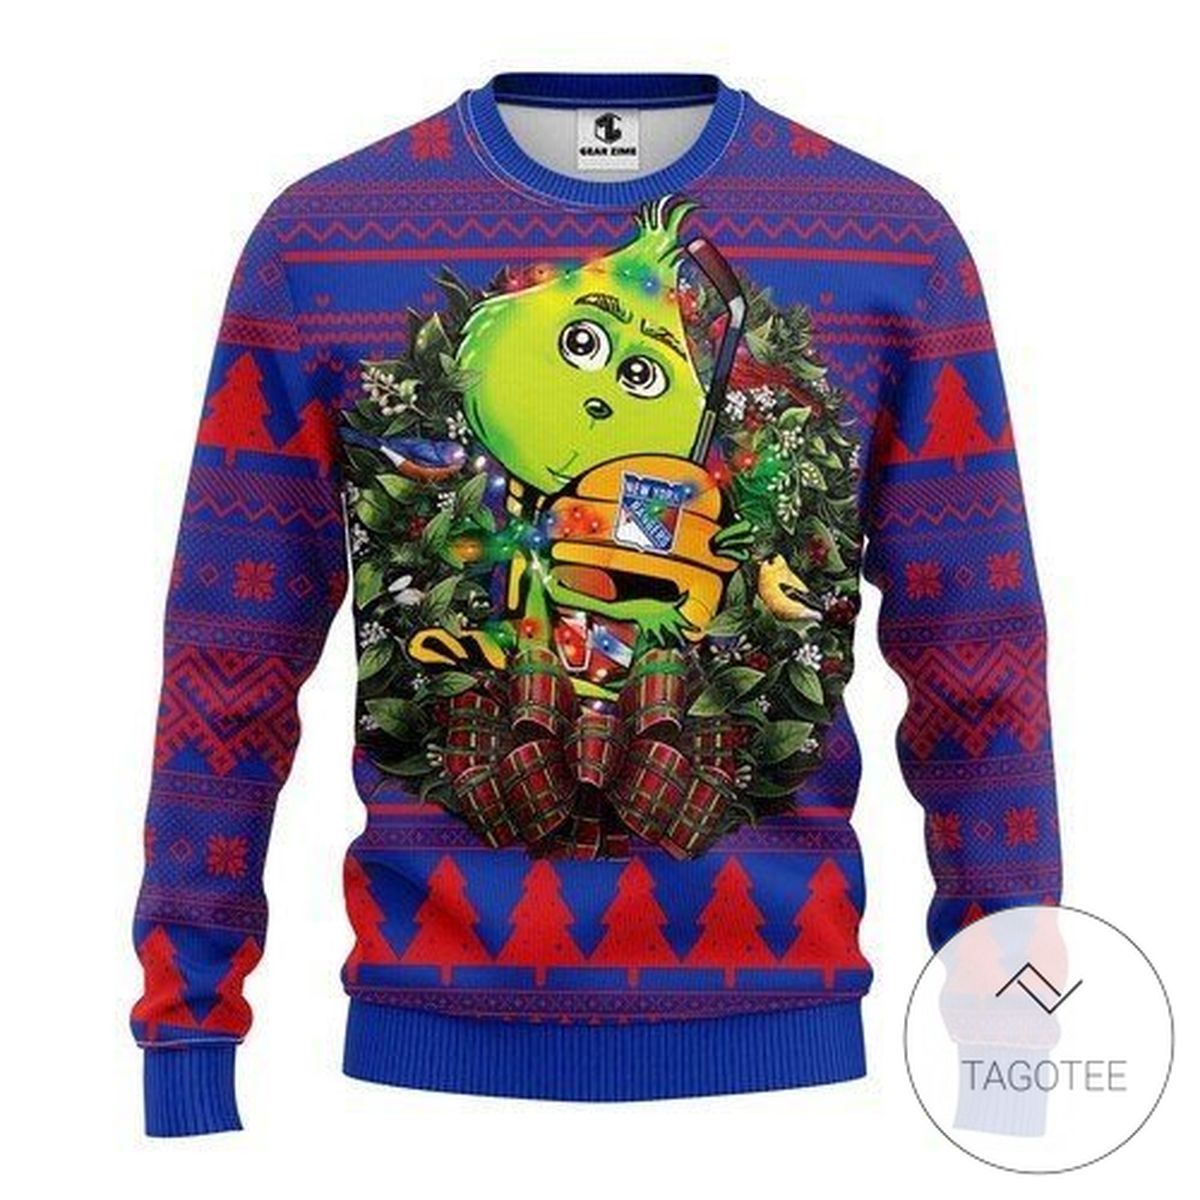 Nhl New York Rangers Grinch Hug Sweatshirt Knitted Ugly Christmas Sweater